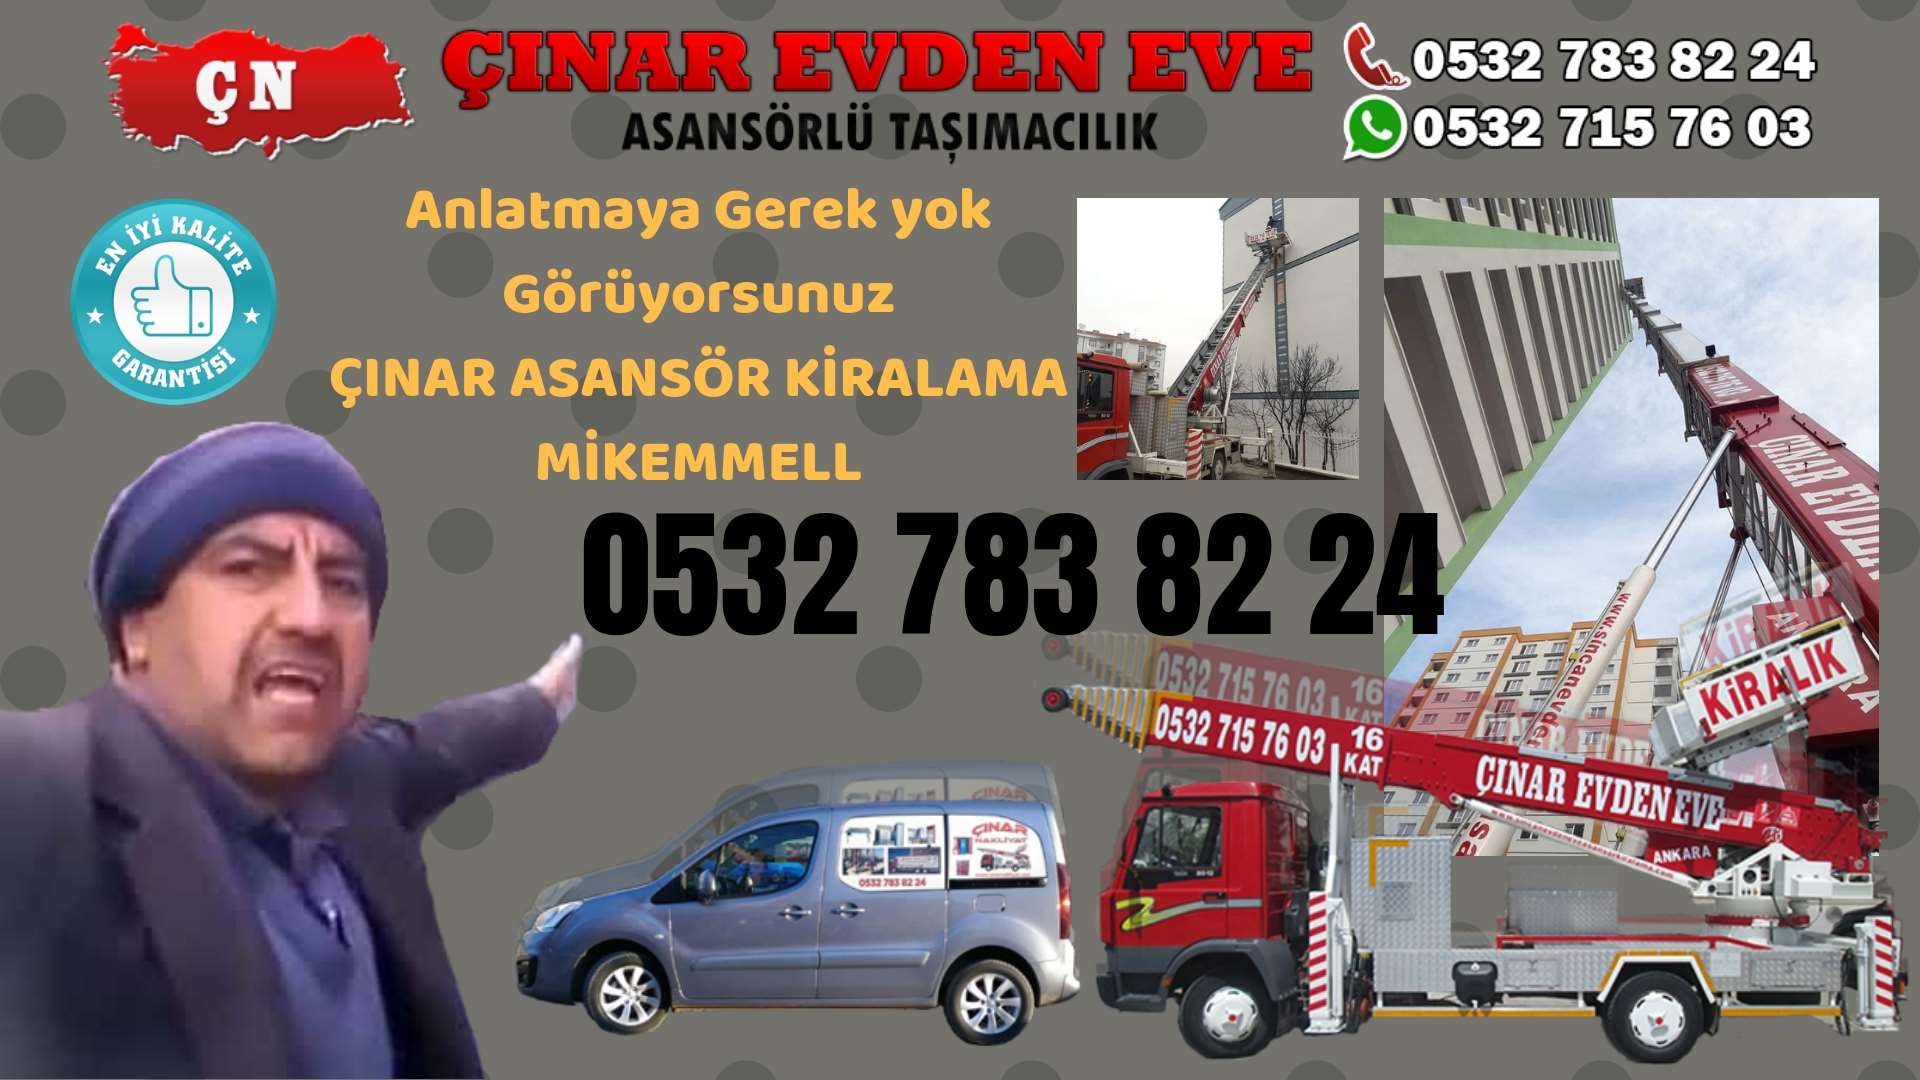 Ankara Nallıhan Ankara asansör kiralama hizmeti sizlere başta kalite ve maddi acıdan tasarruf 0532 715 76 03